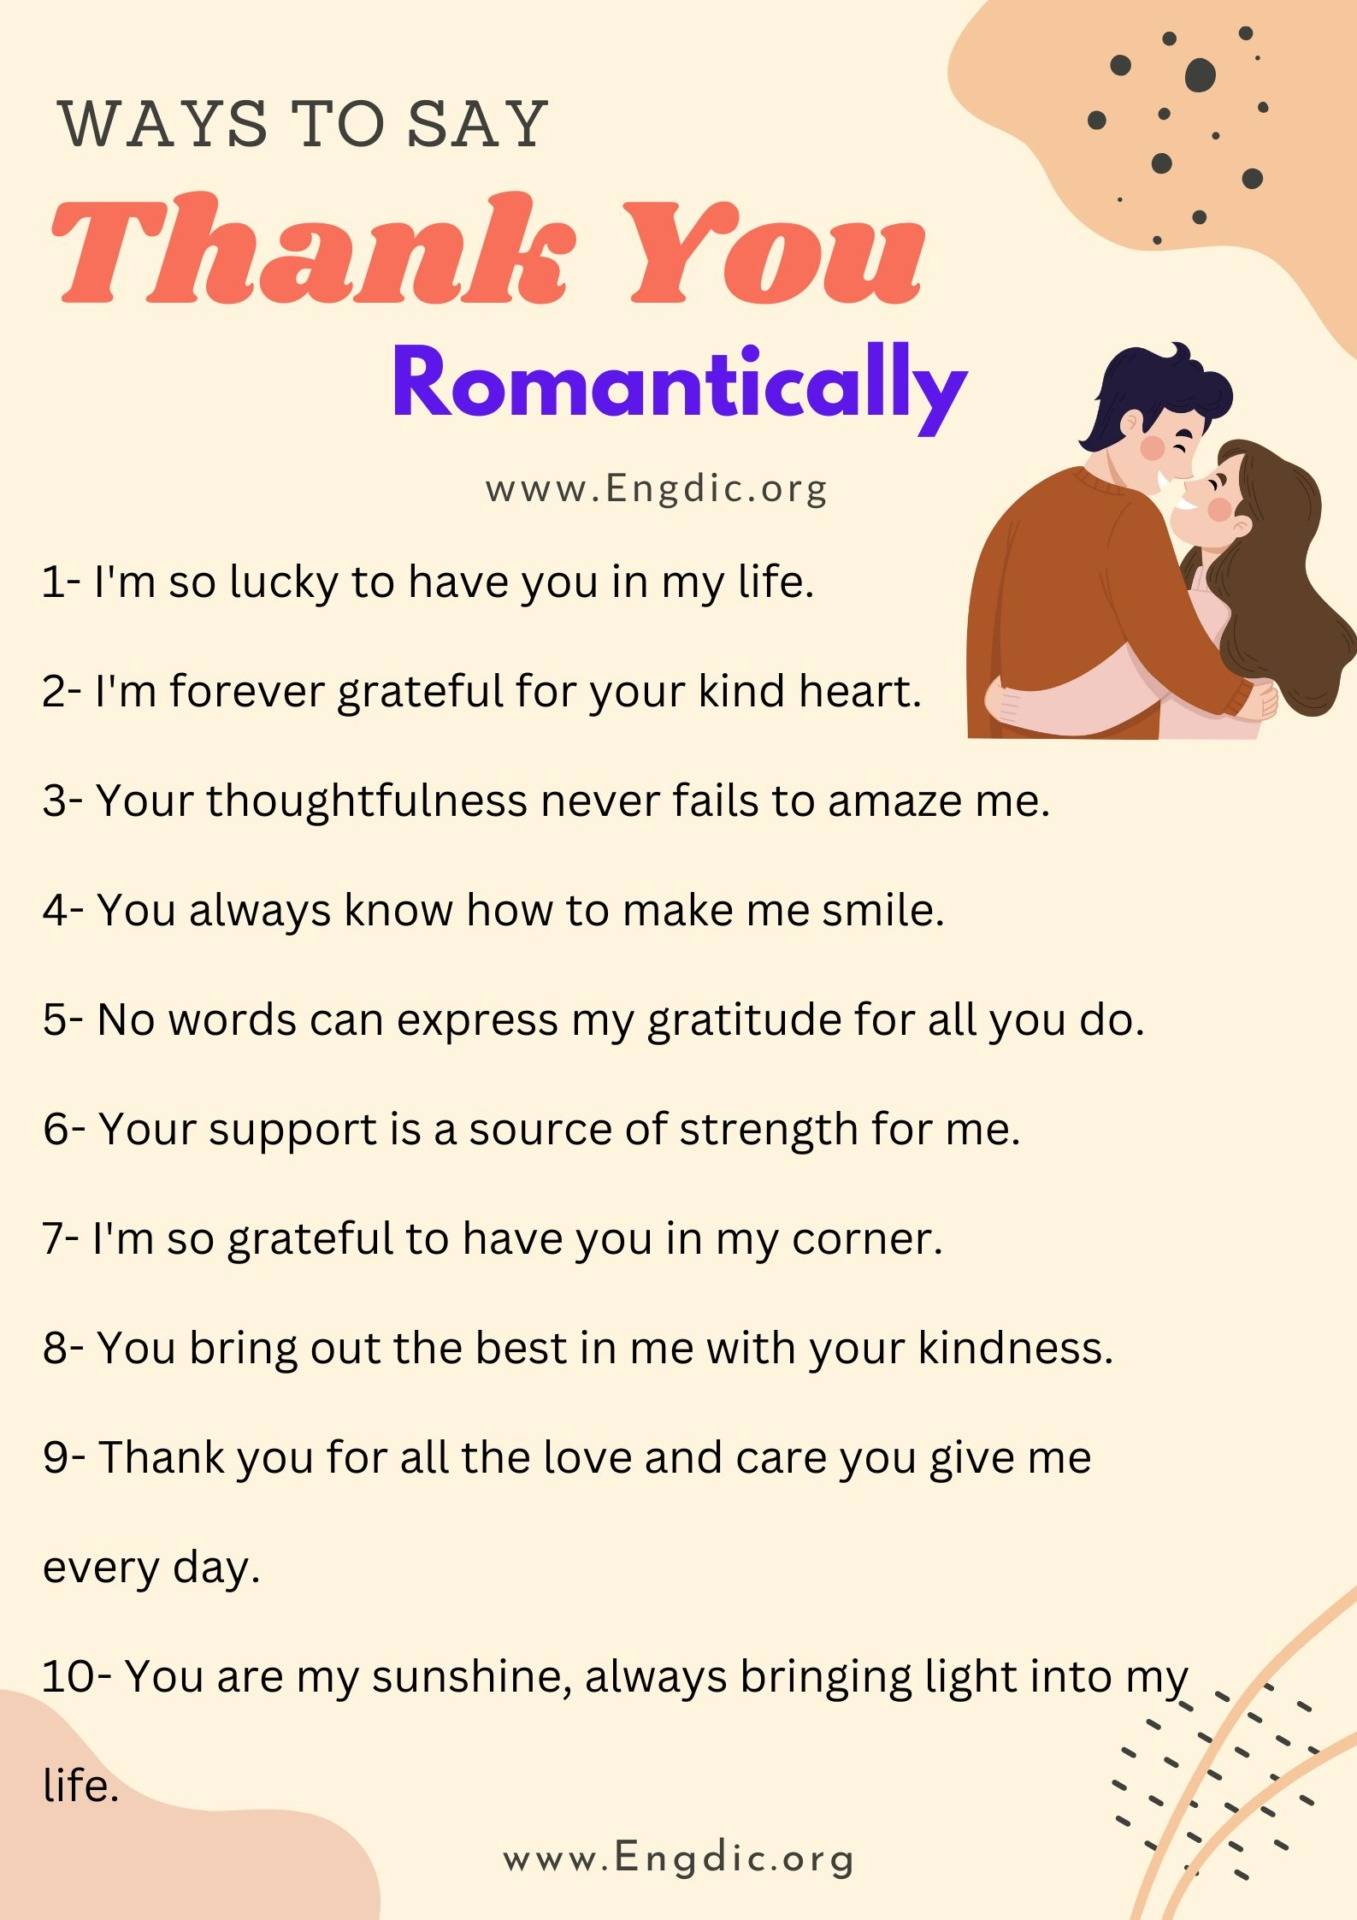 Ways to say thank you Romantically